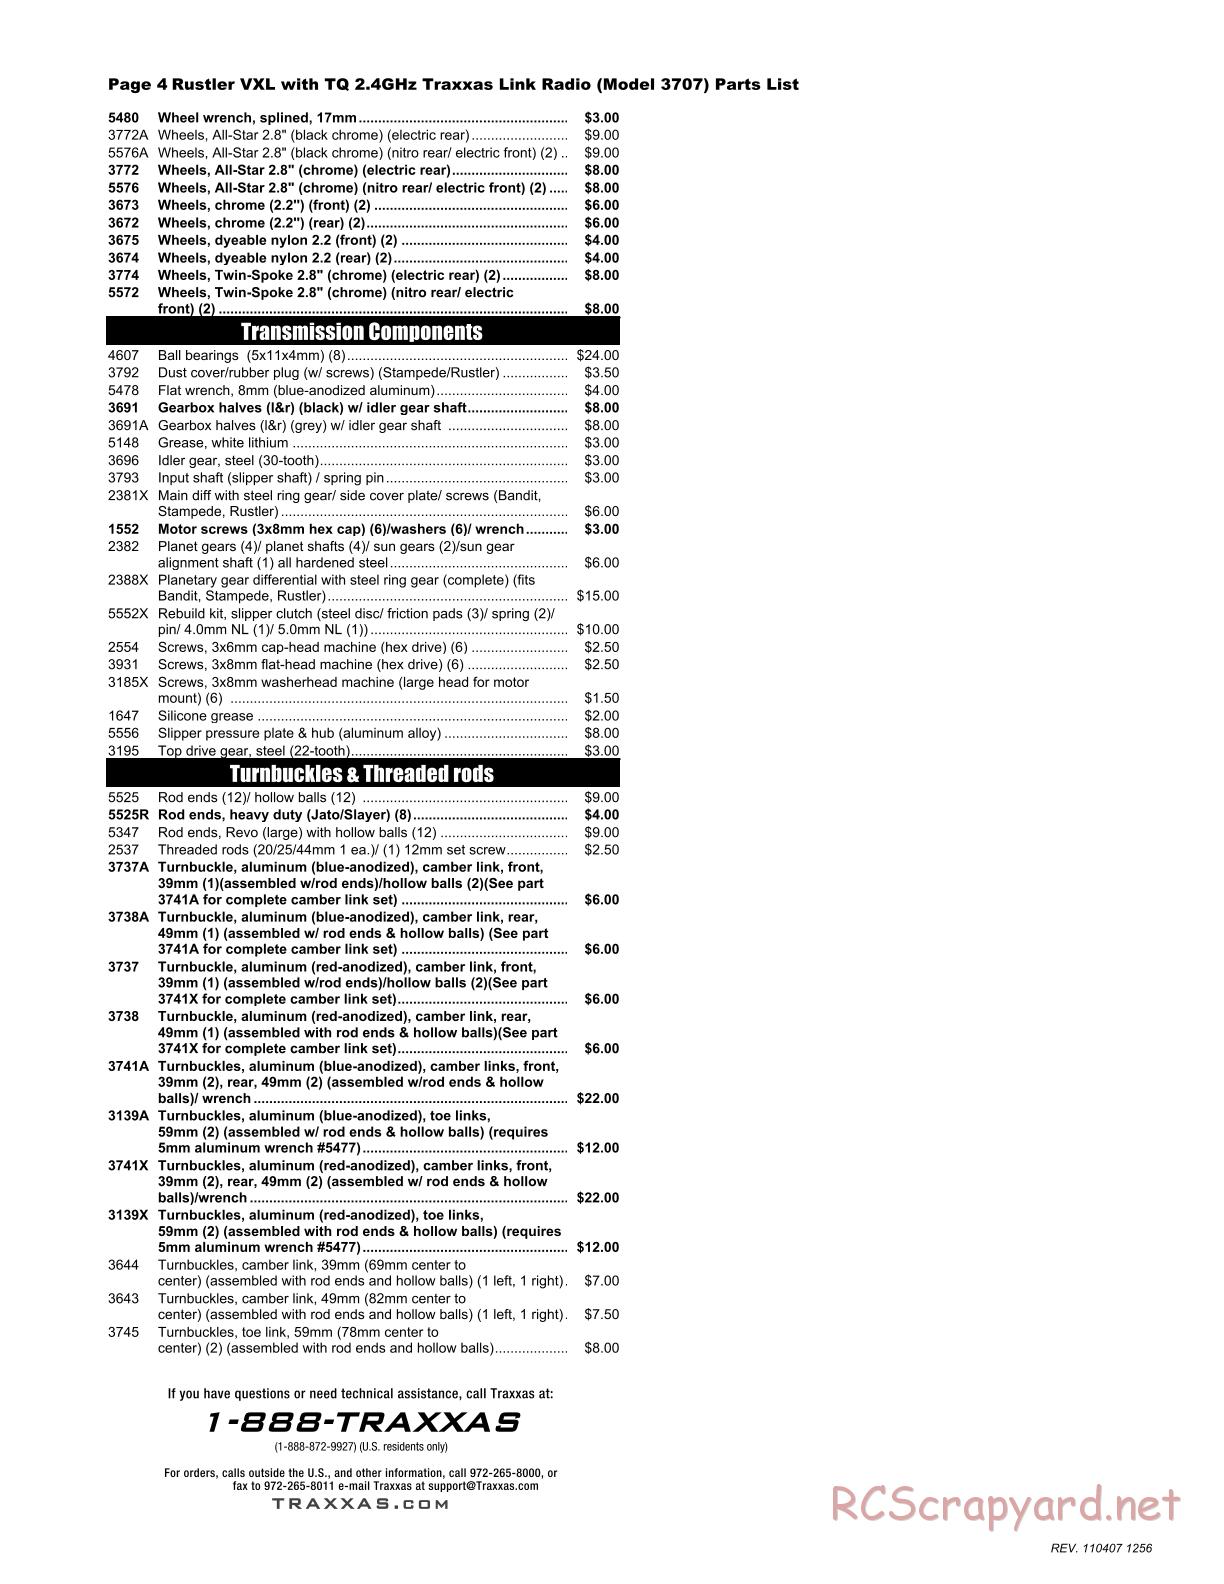 Traxxas - Rustler VXL - Parts List - Page 4